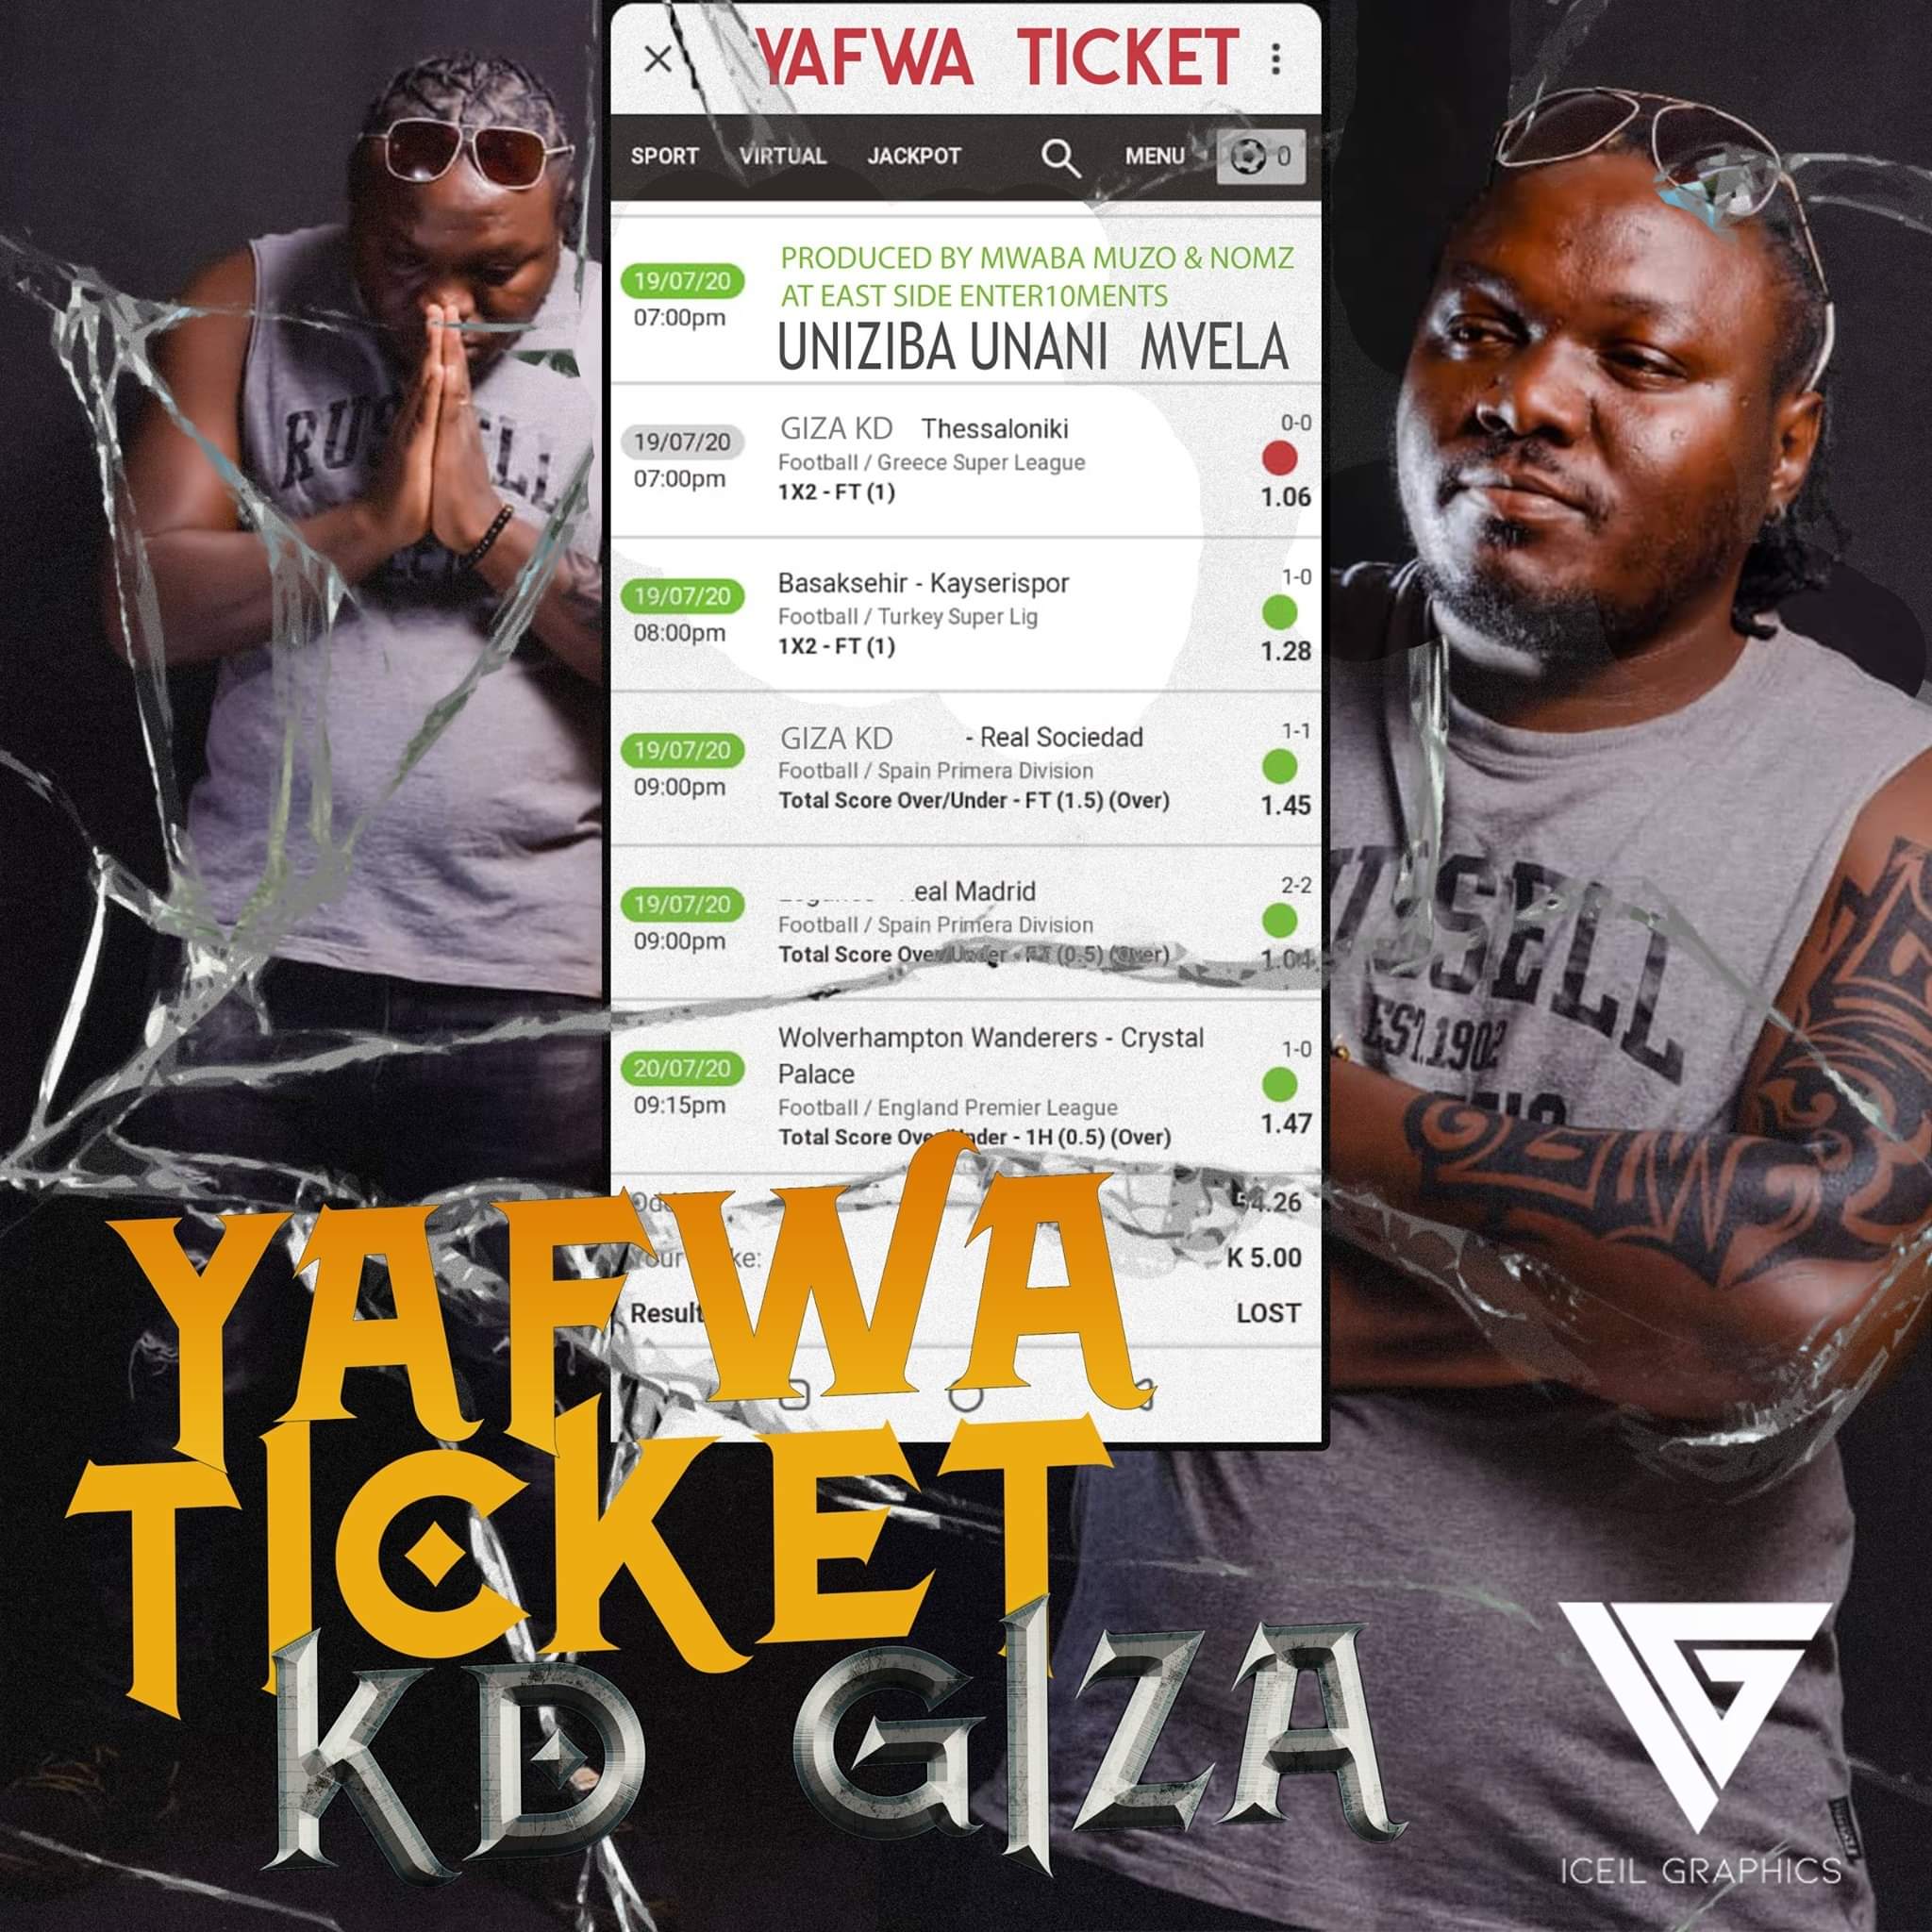 Yafwa Ticket